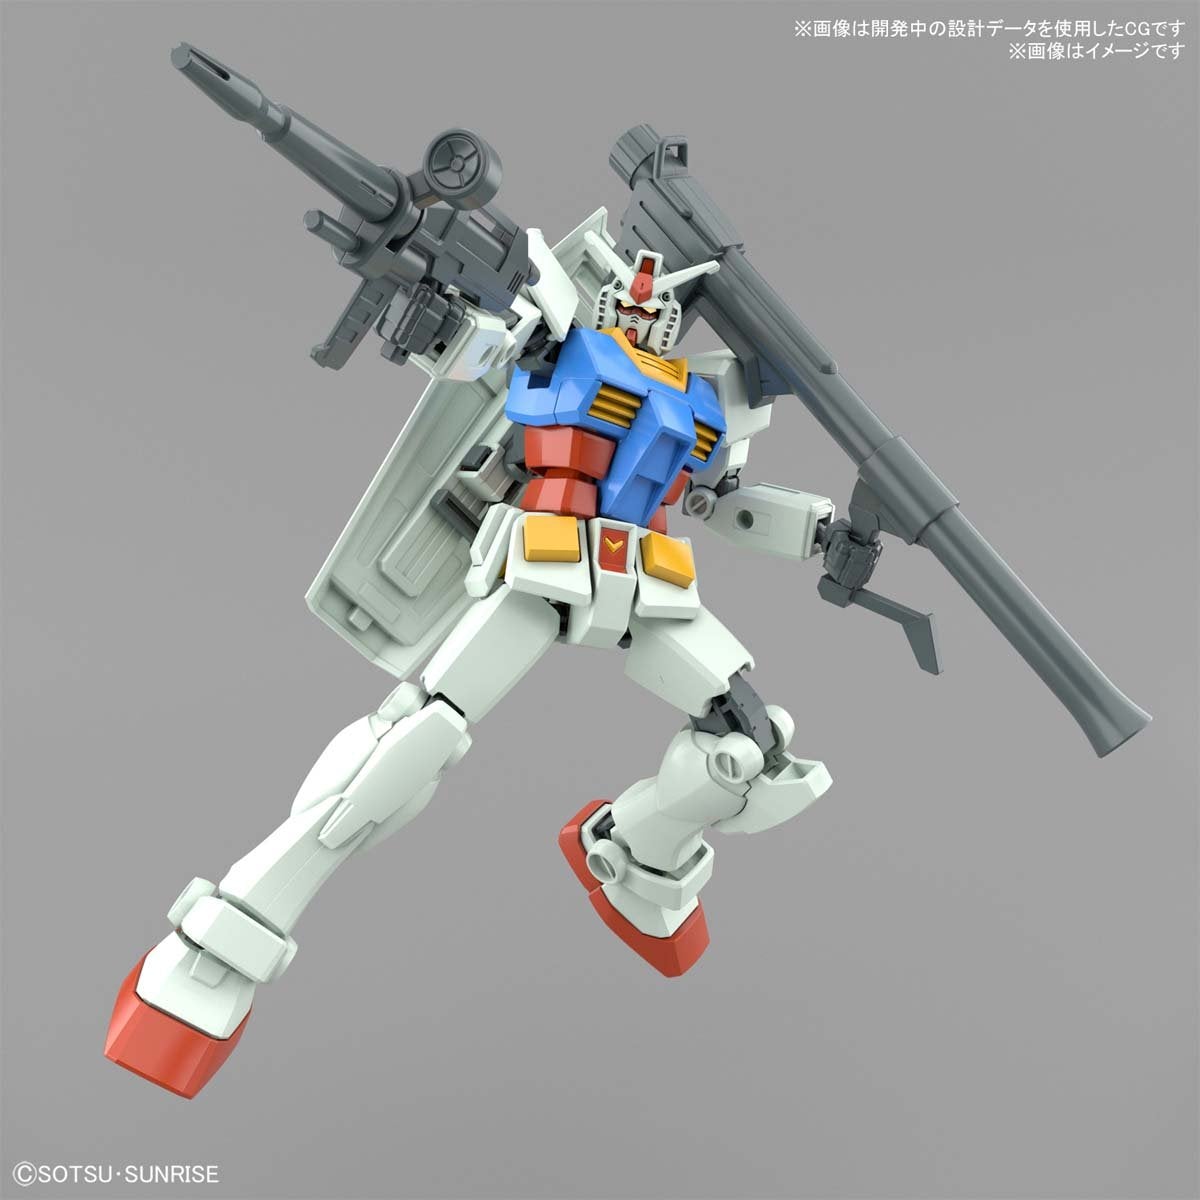 Gunpla Entry Grade RX-78-2 Gundam (Full Weapon Set)-Bandai-Ace Cards & Collectibles